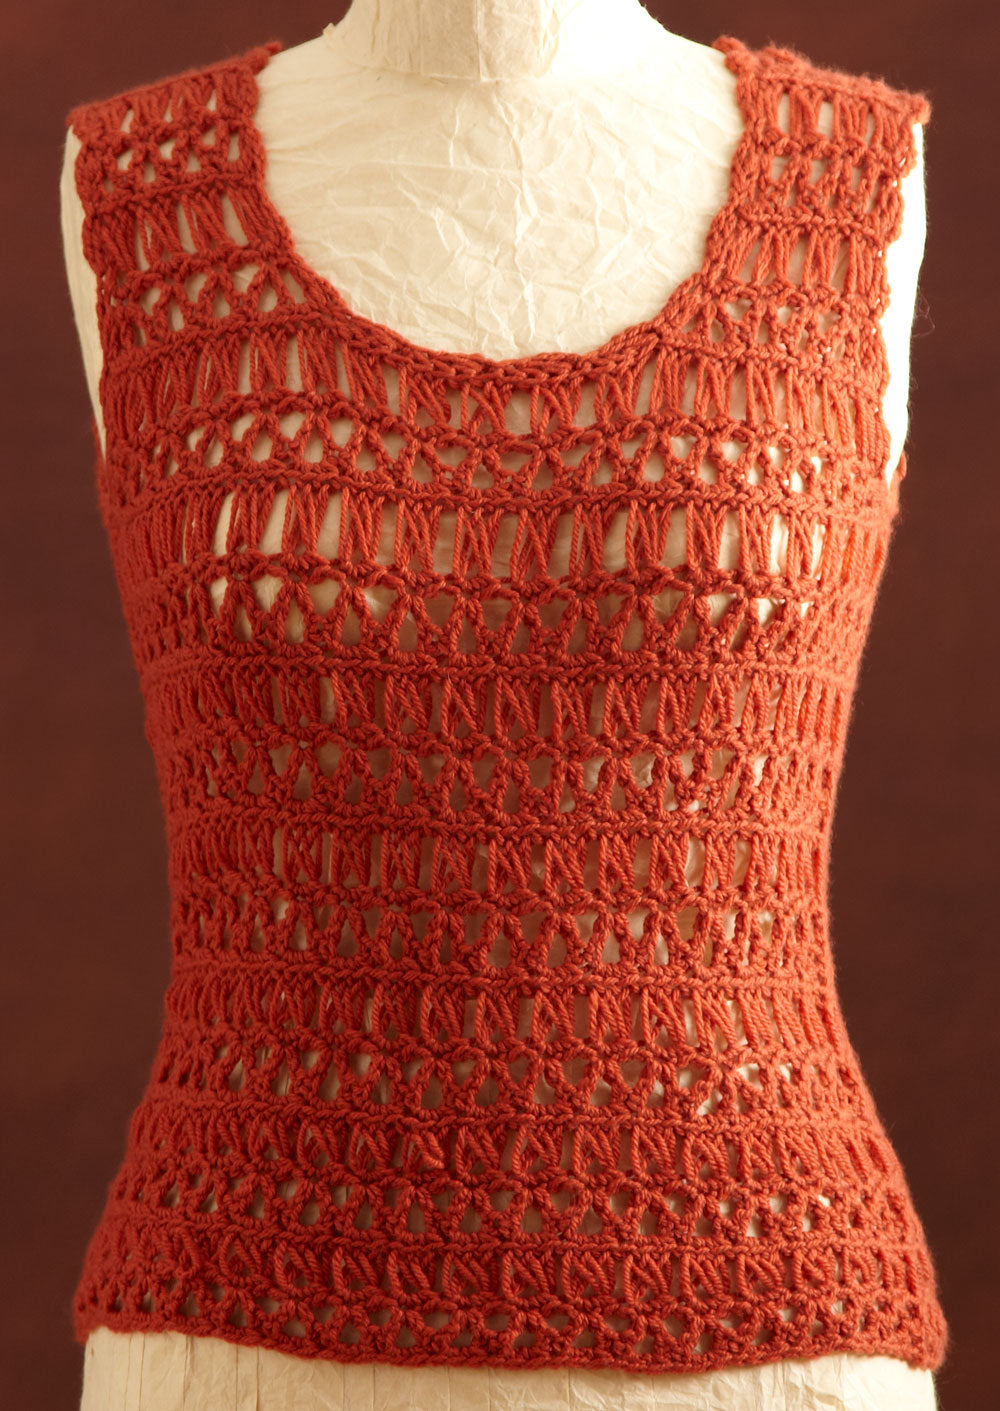 NEW YARN: Bernat Felted Yarn  Broomstick lace, Lace shawl pattern,  Metallic yarn